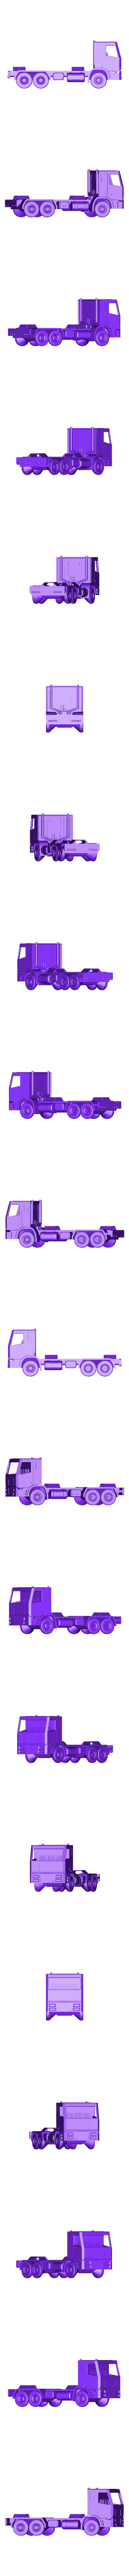 Truck_Base.stl Download free STL file Print-in-Place Car Transport Module • 3D print design, budinavit